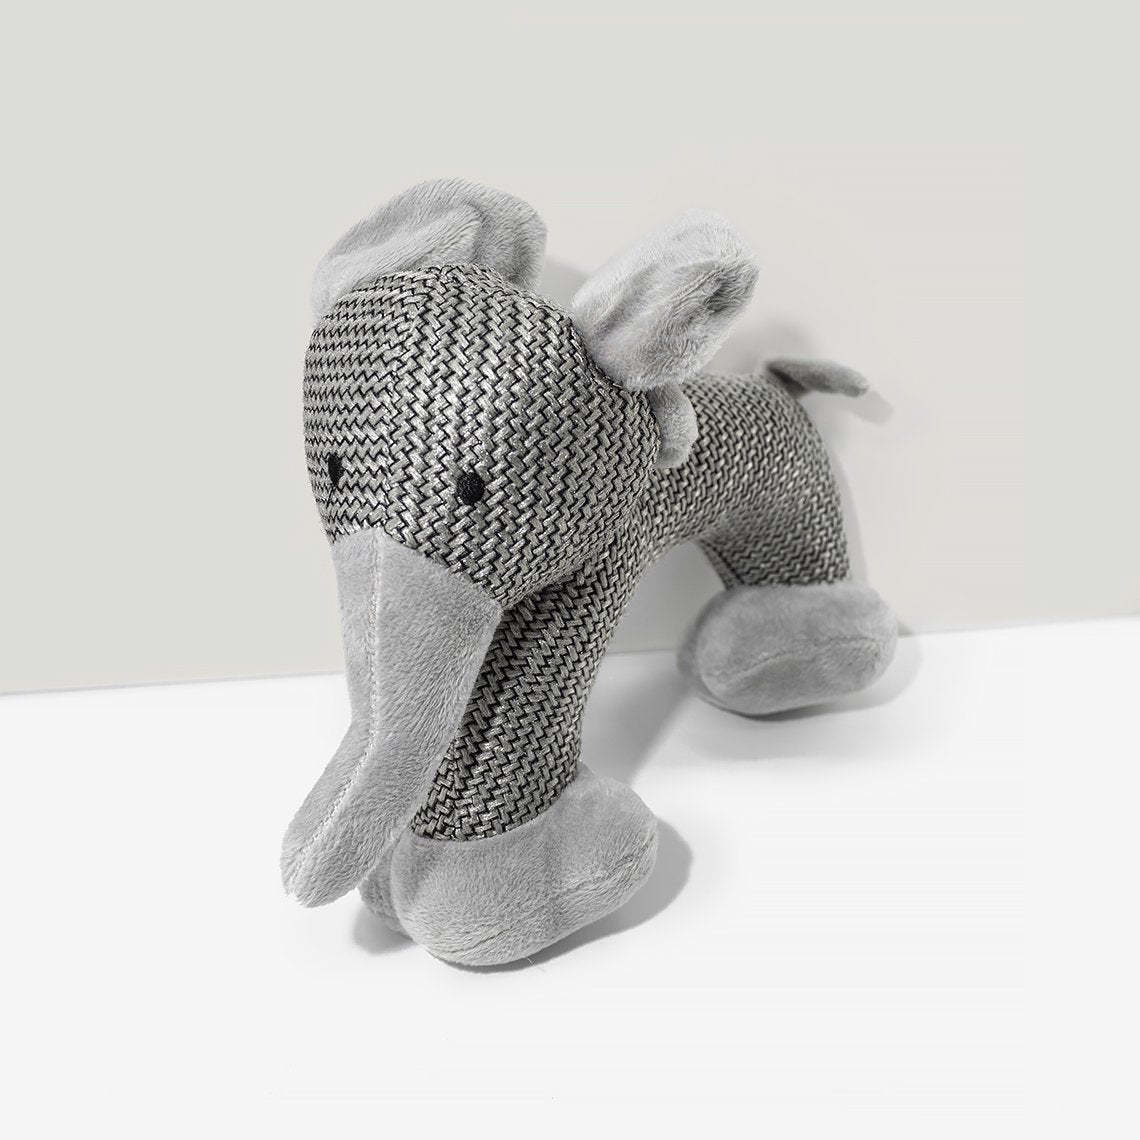 An elephant dog toy on the white background.